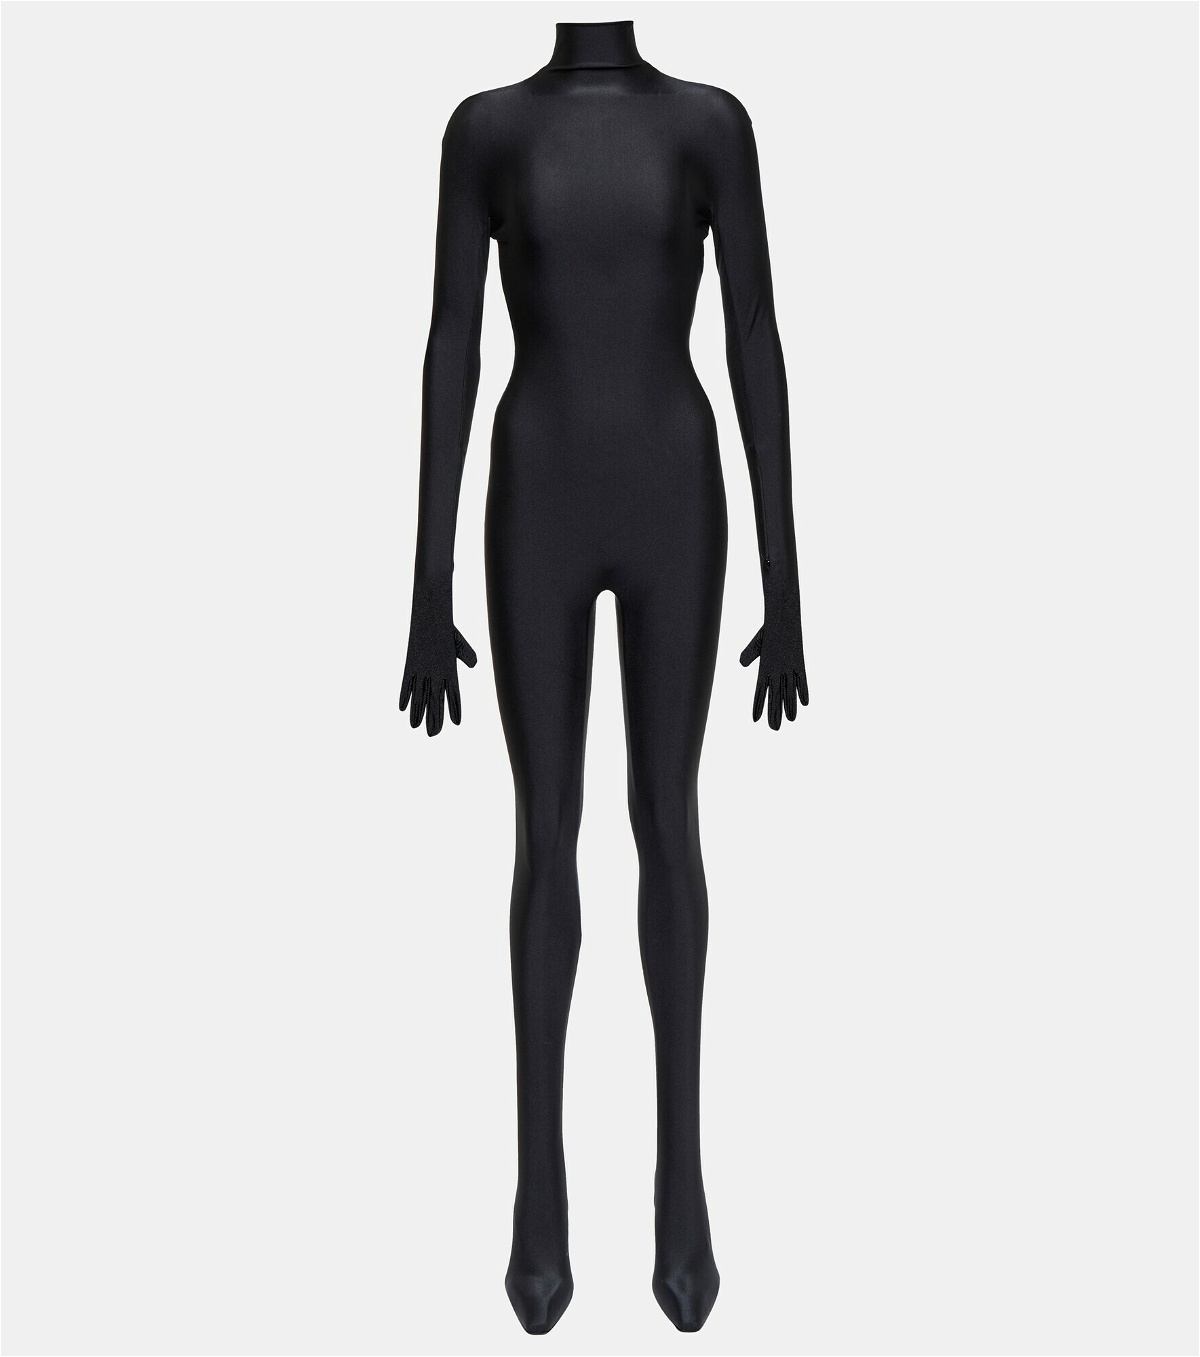 Balenciaga - Full-body jumpsuit (FR36/shoe 37) Balenciaga